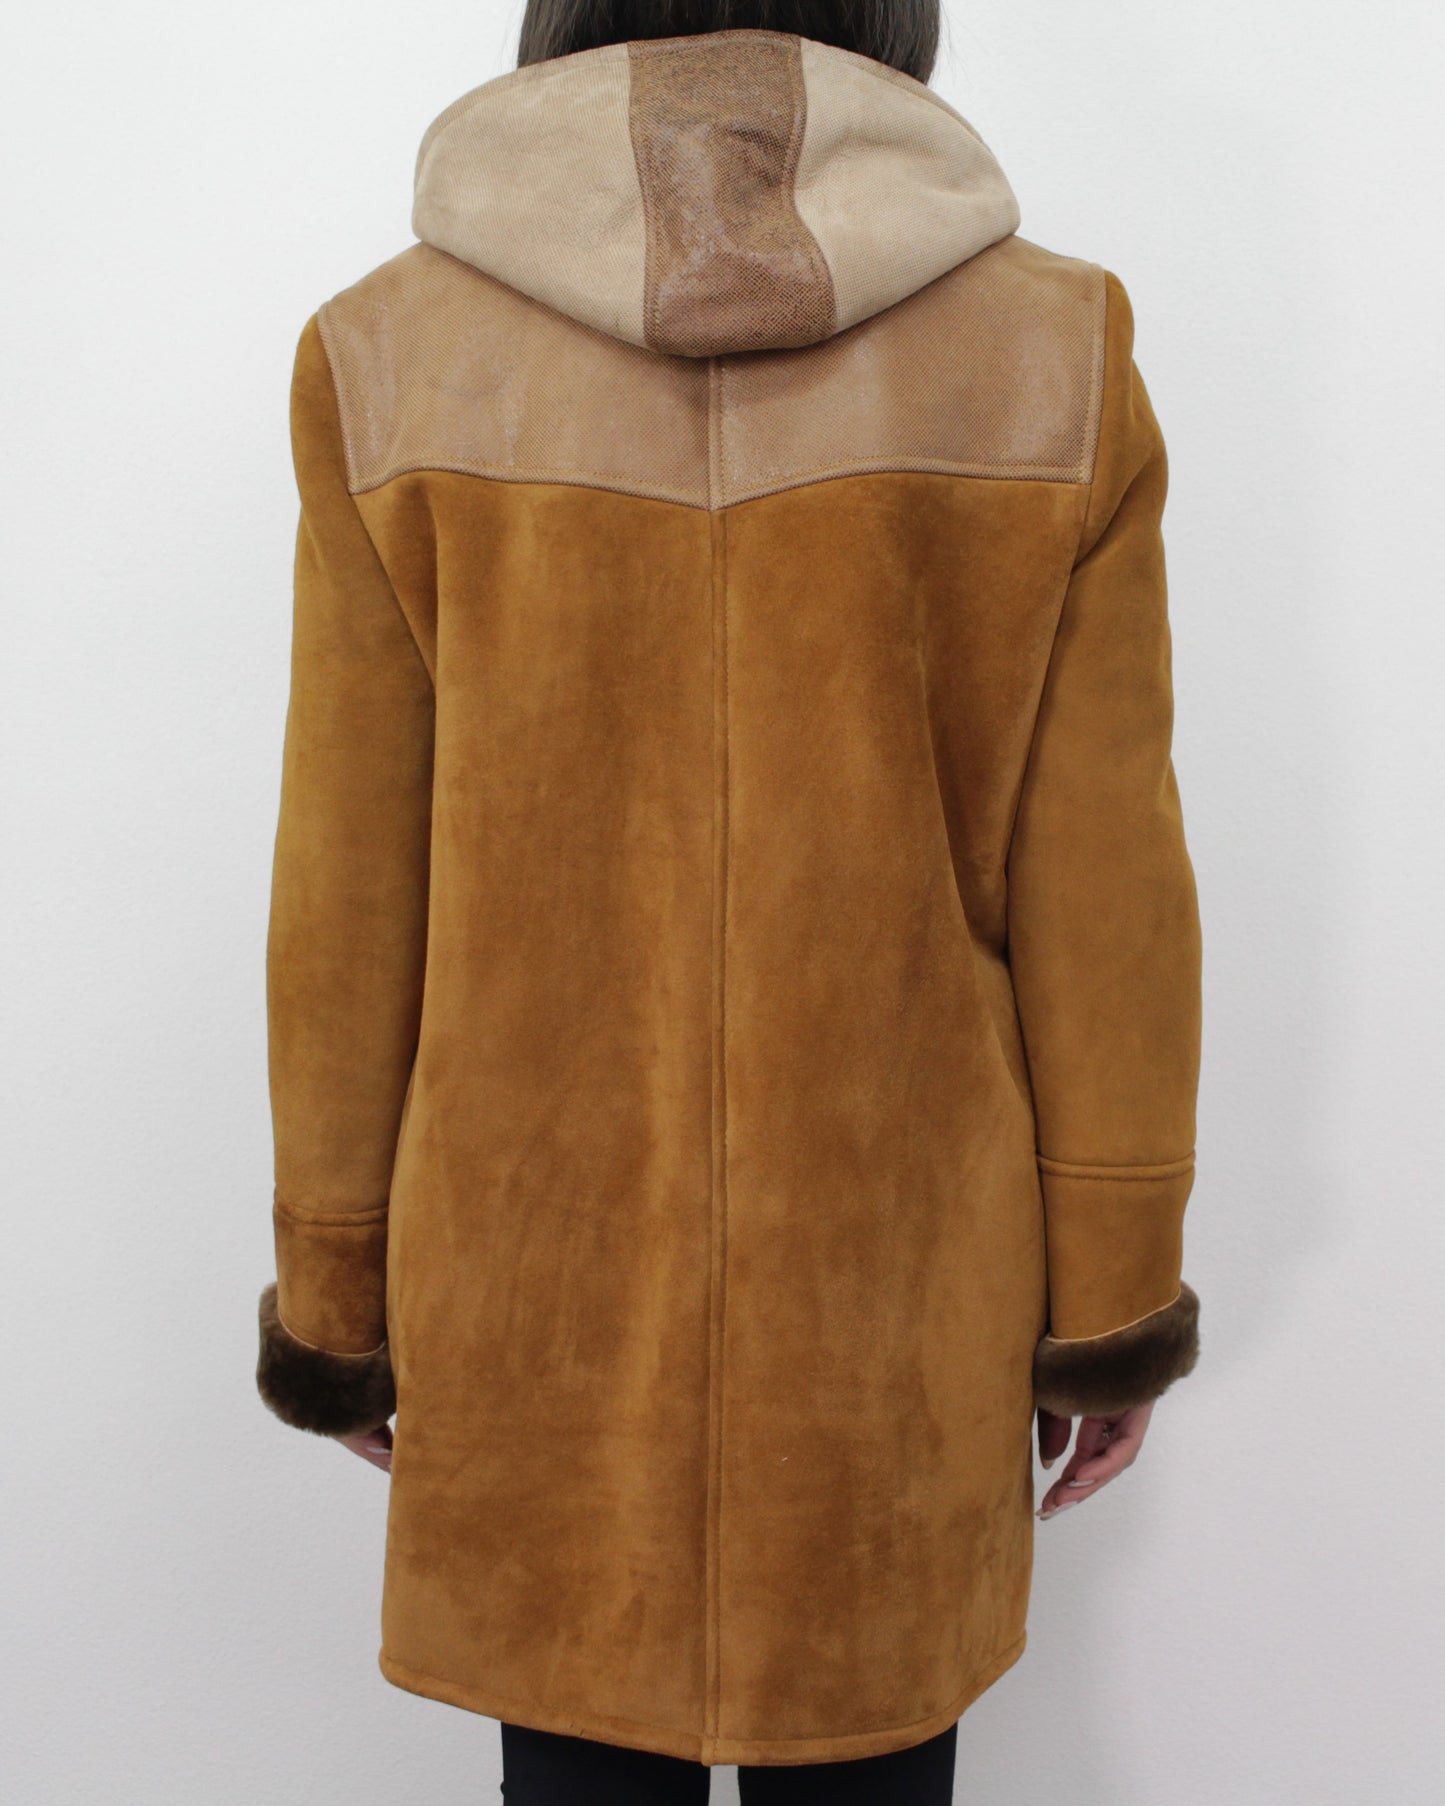 Women's Sheepskin Jacket - Made in Italy Artisan Collection by Ferdinando Patermo